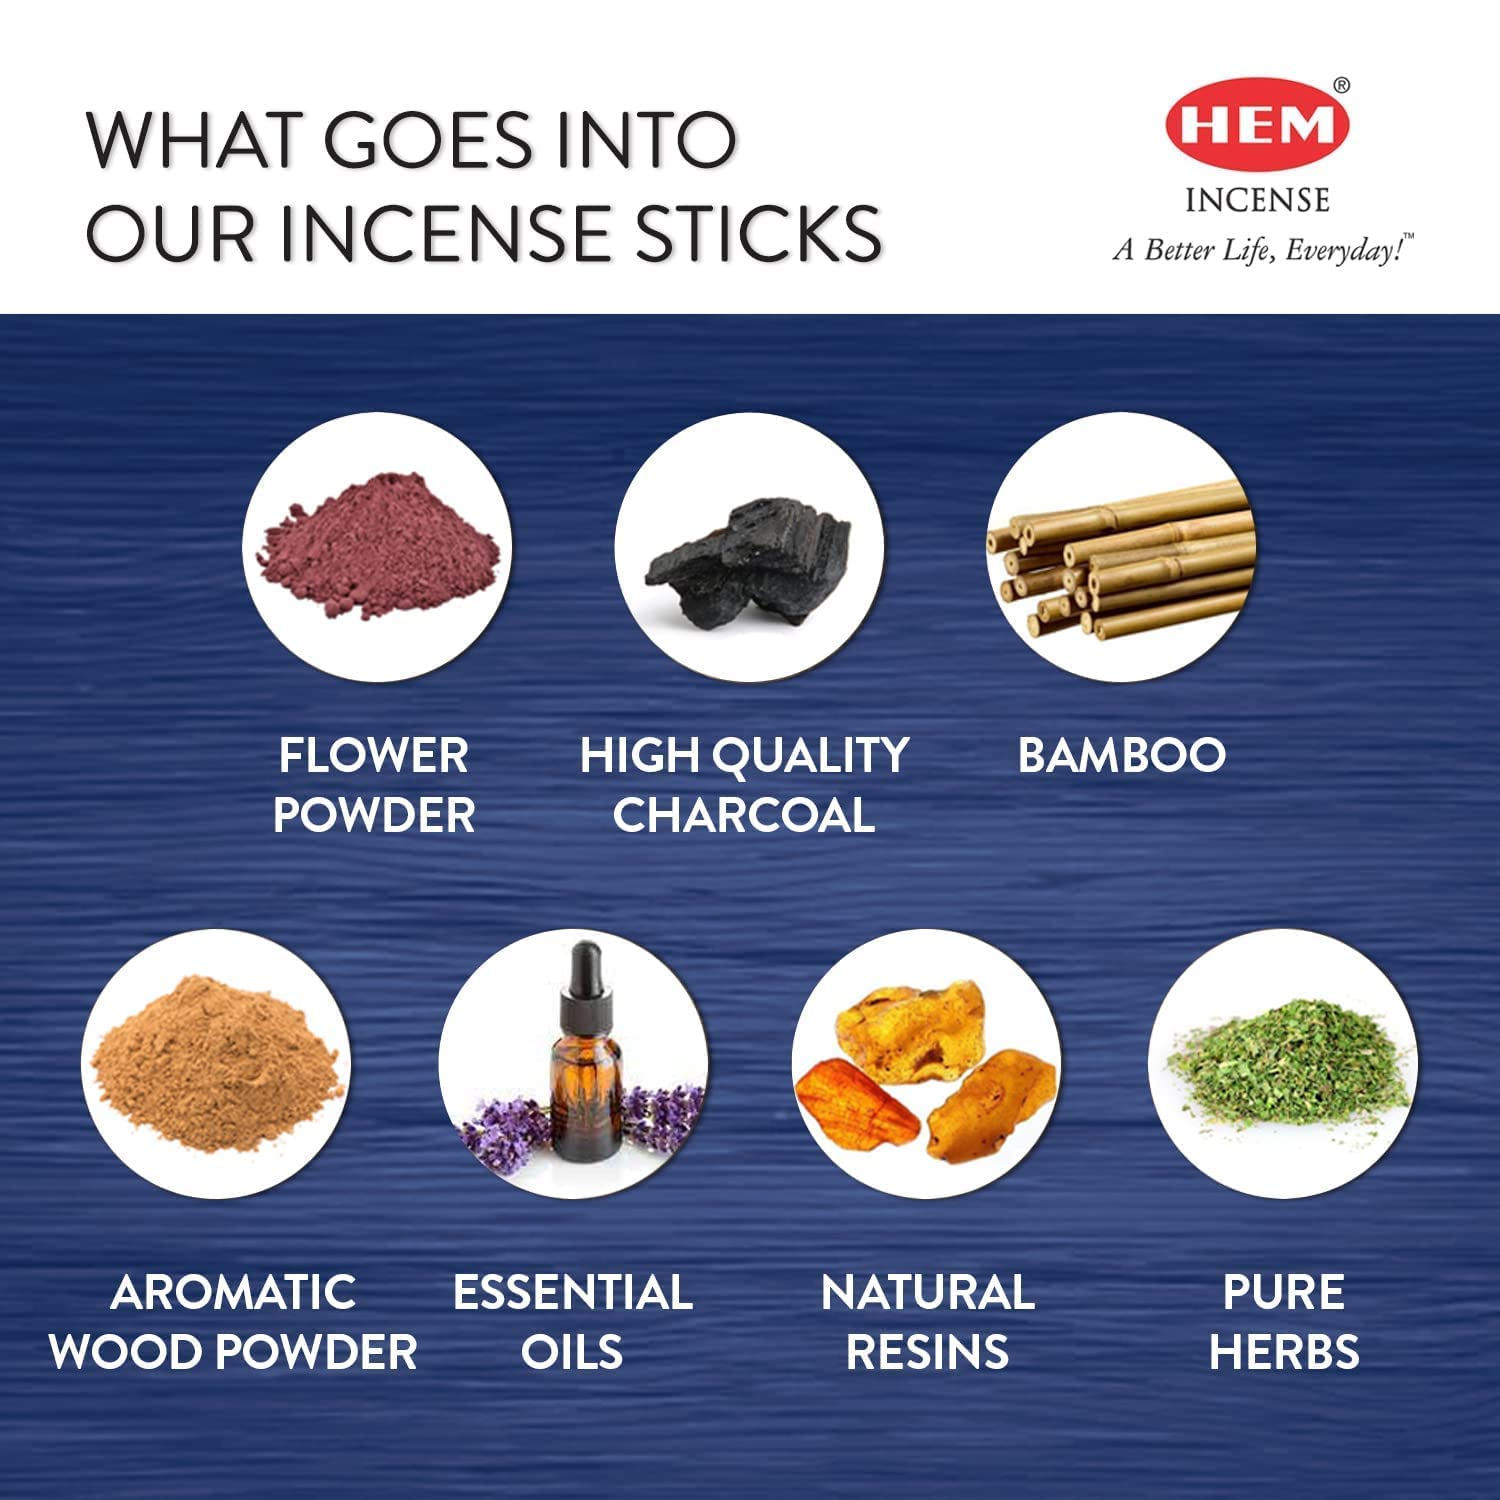 incense-sticks-ingredients